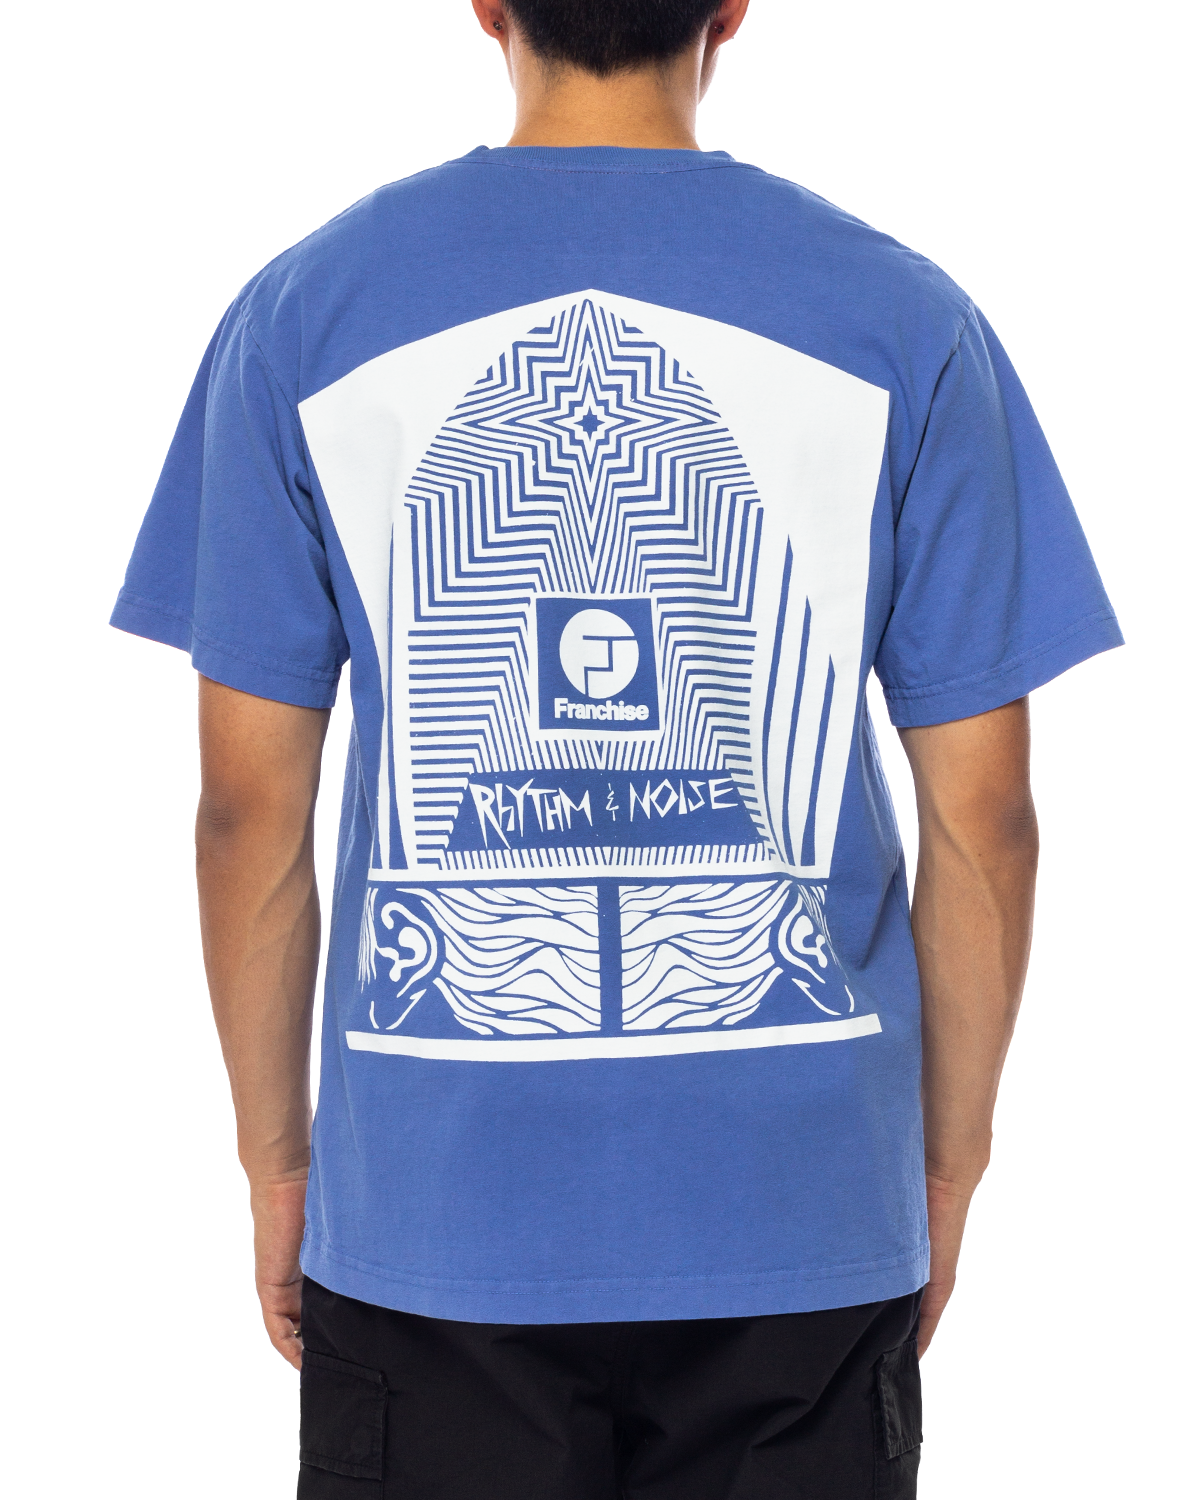 Rhythm & Noise Short Sleeve T-Shirt Periwinkle